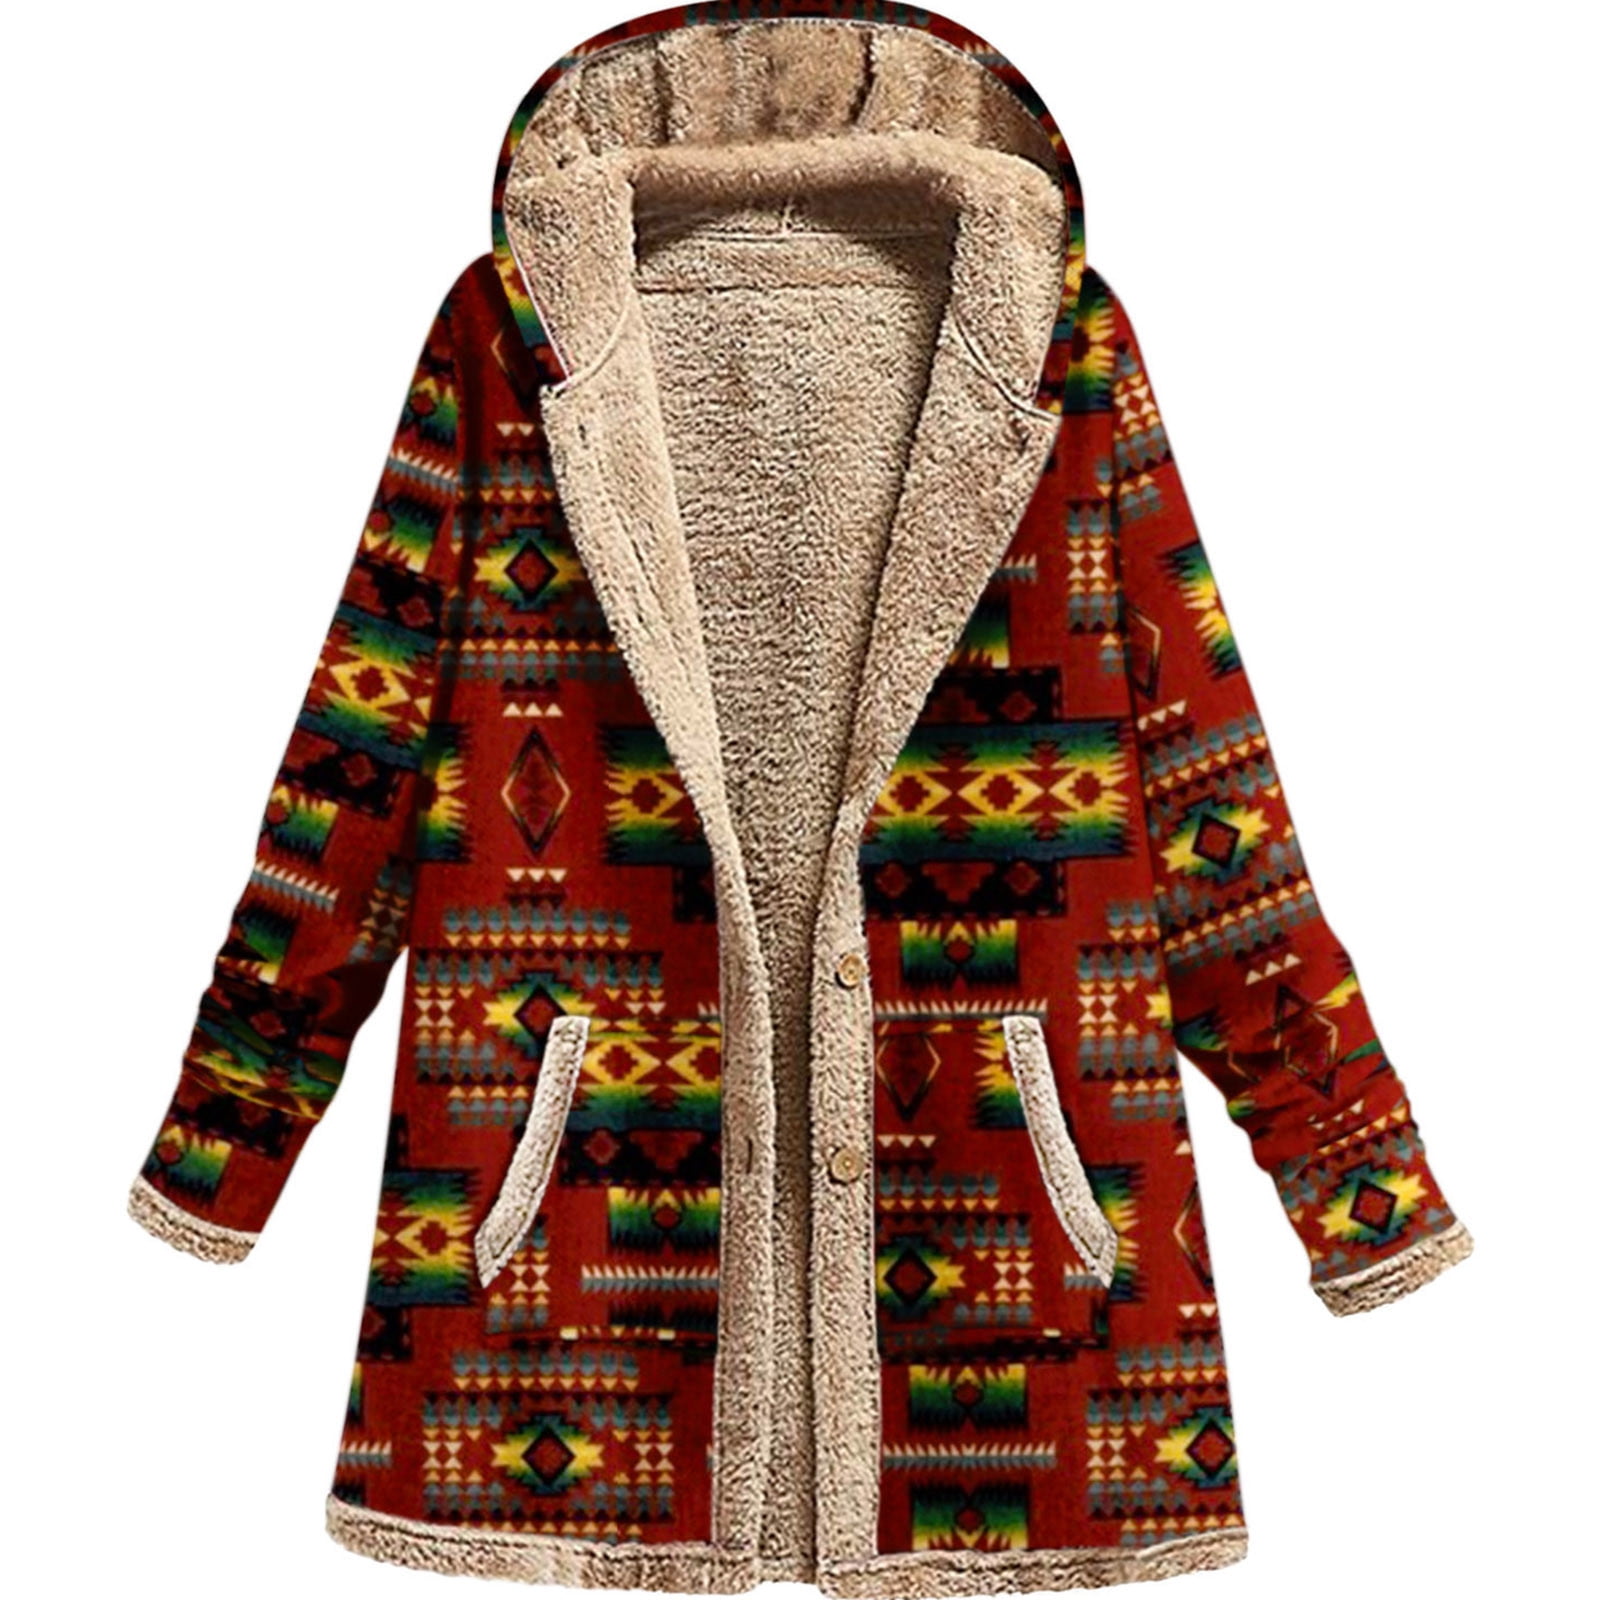 50% Off Clear! SHOPESSA Fashion Womens Warm Faux Coat Jacket